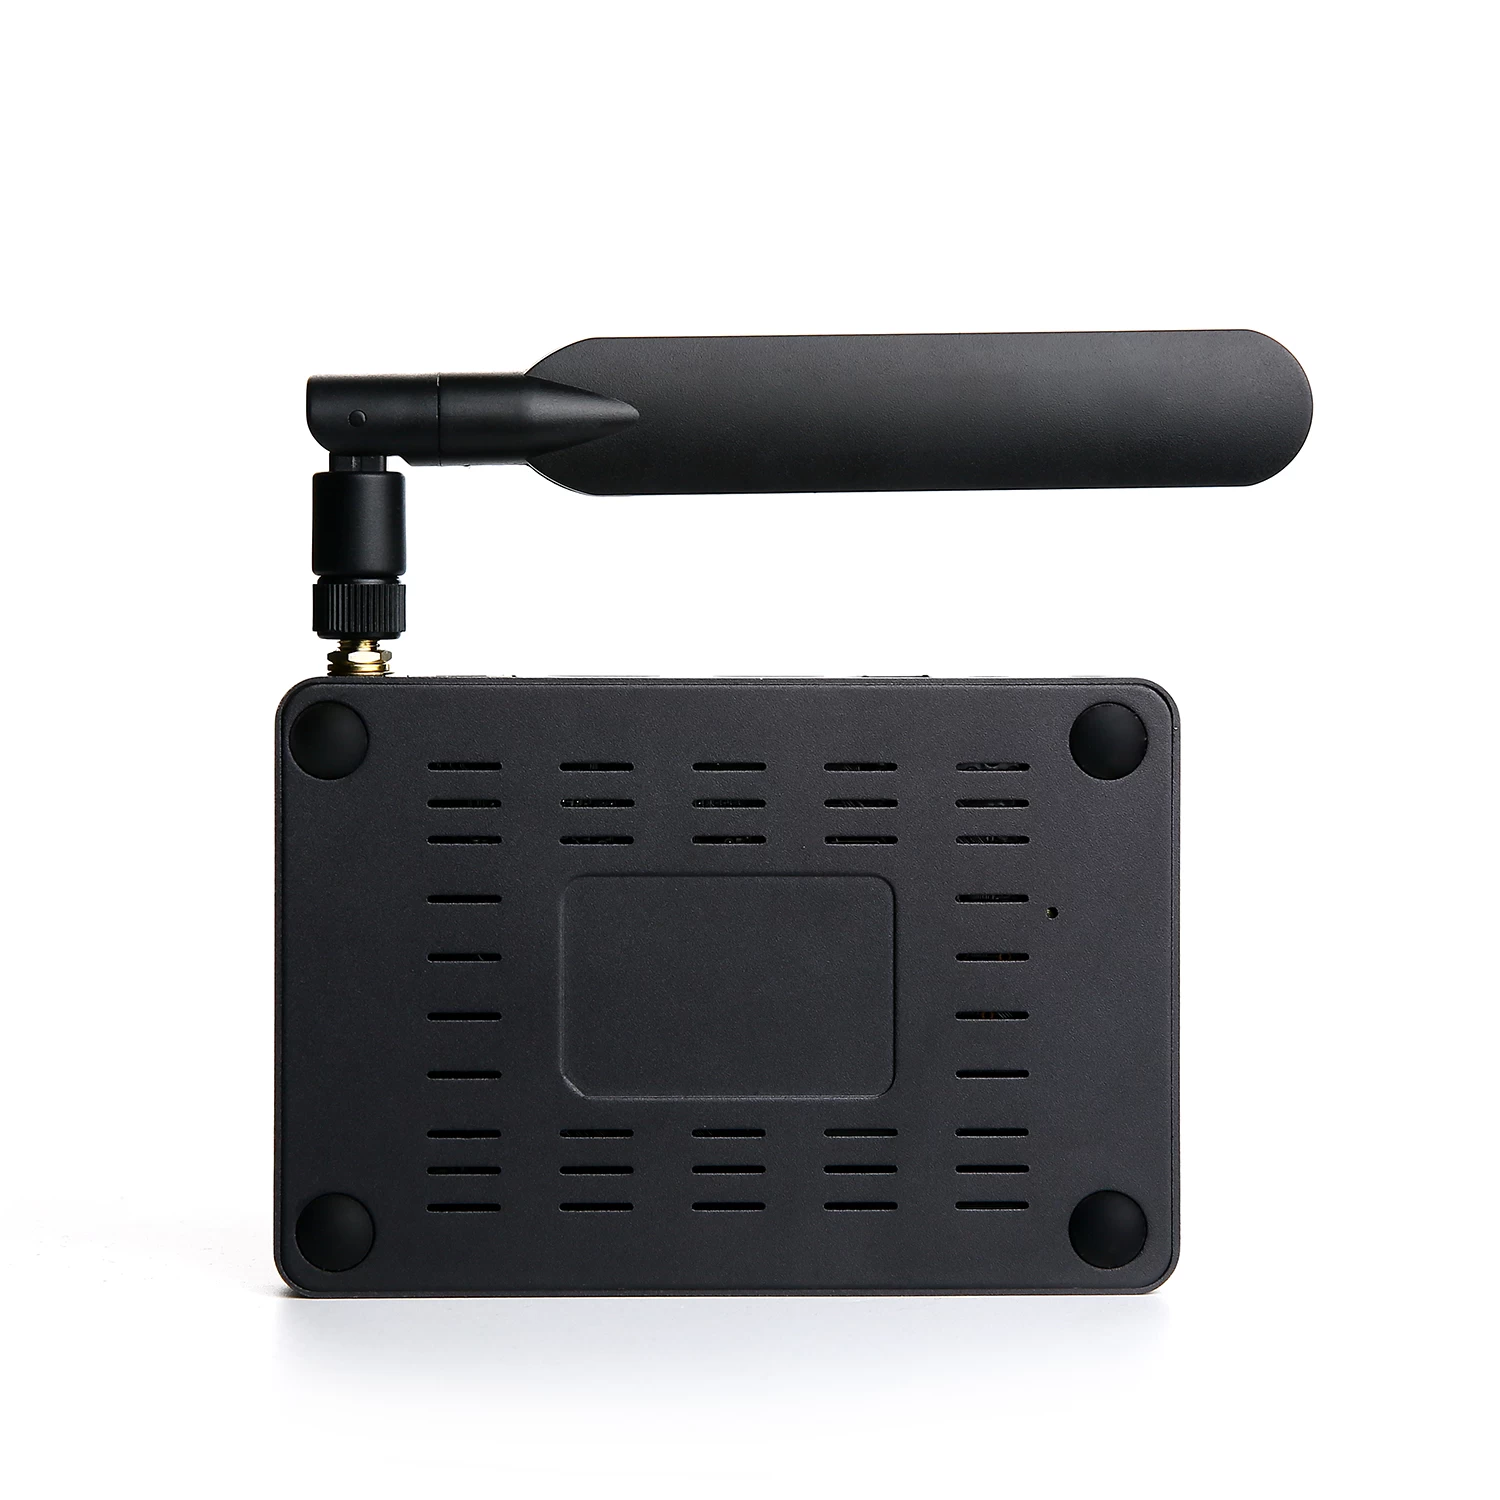 Коробка HDMI TV андроида входная для записи видео, коробка TV андроида PIP / UDP поставщик